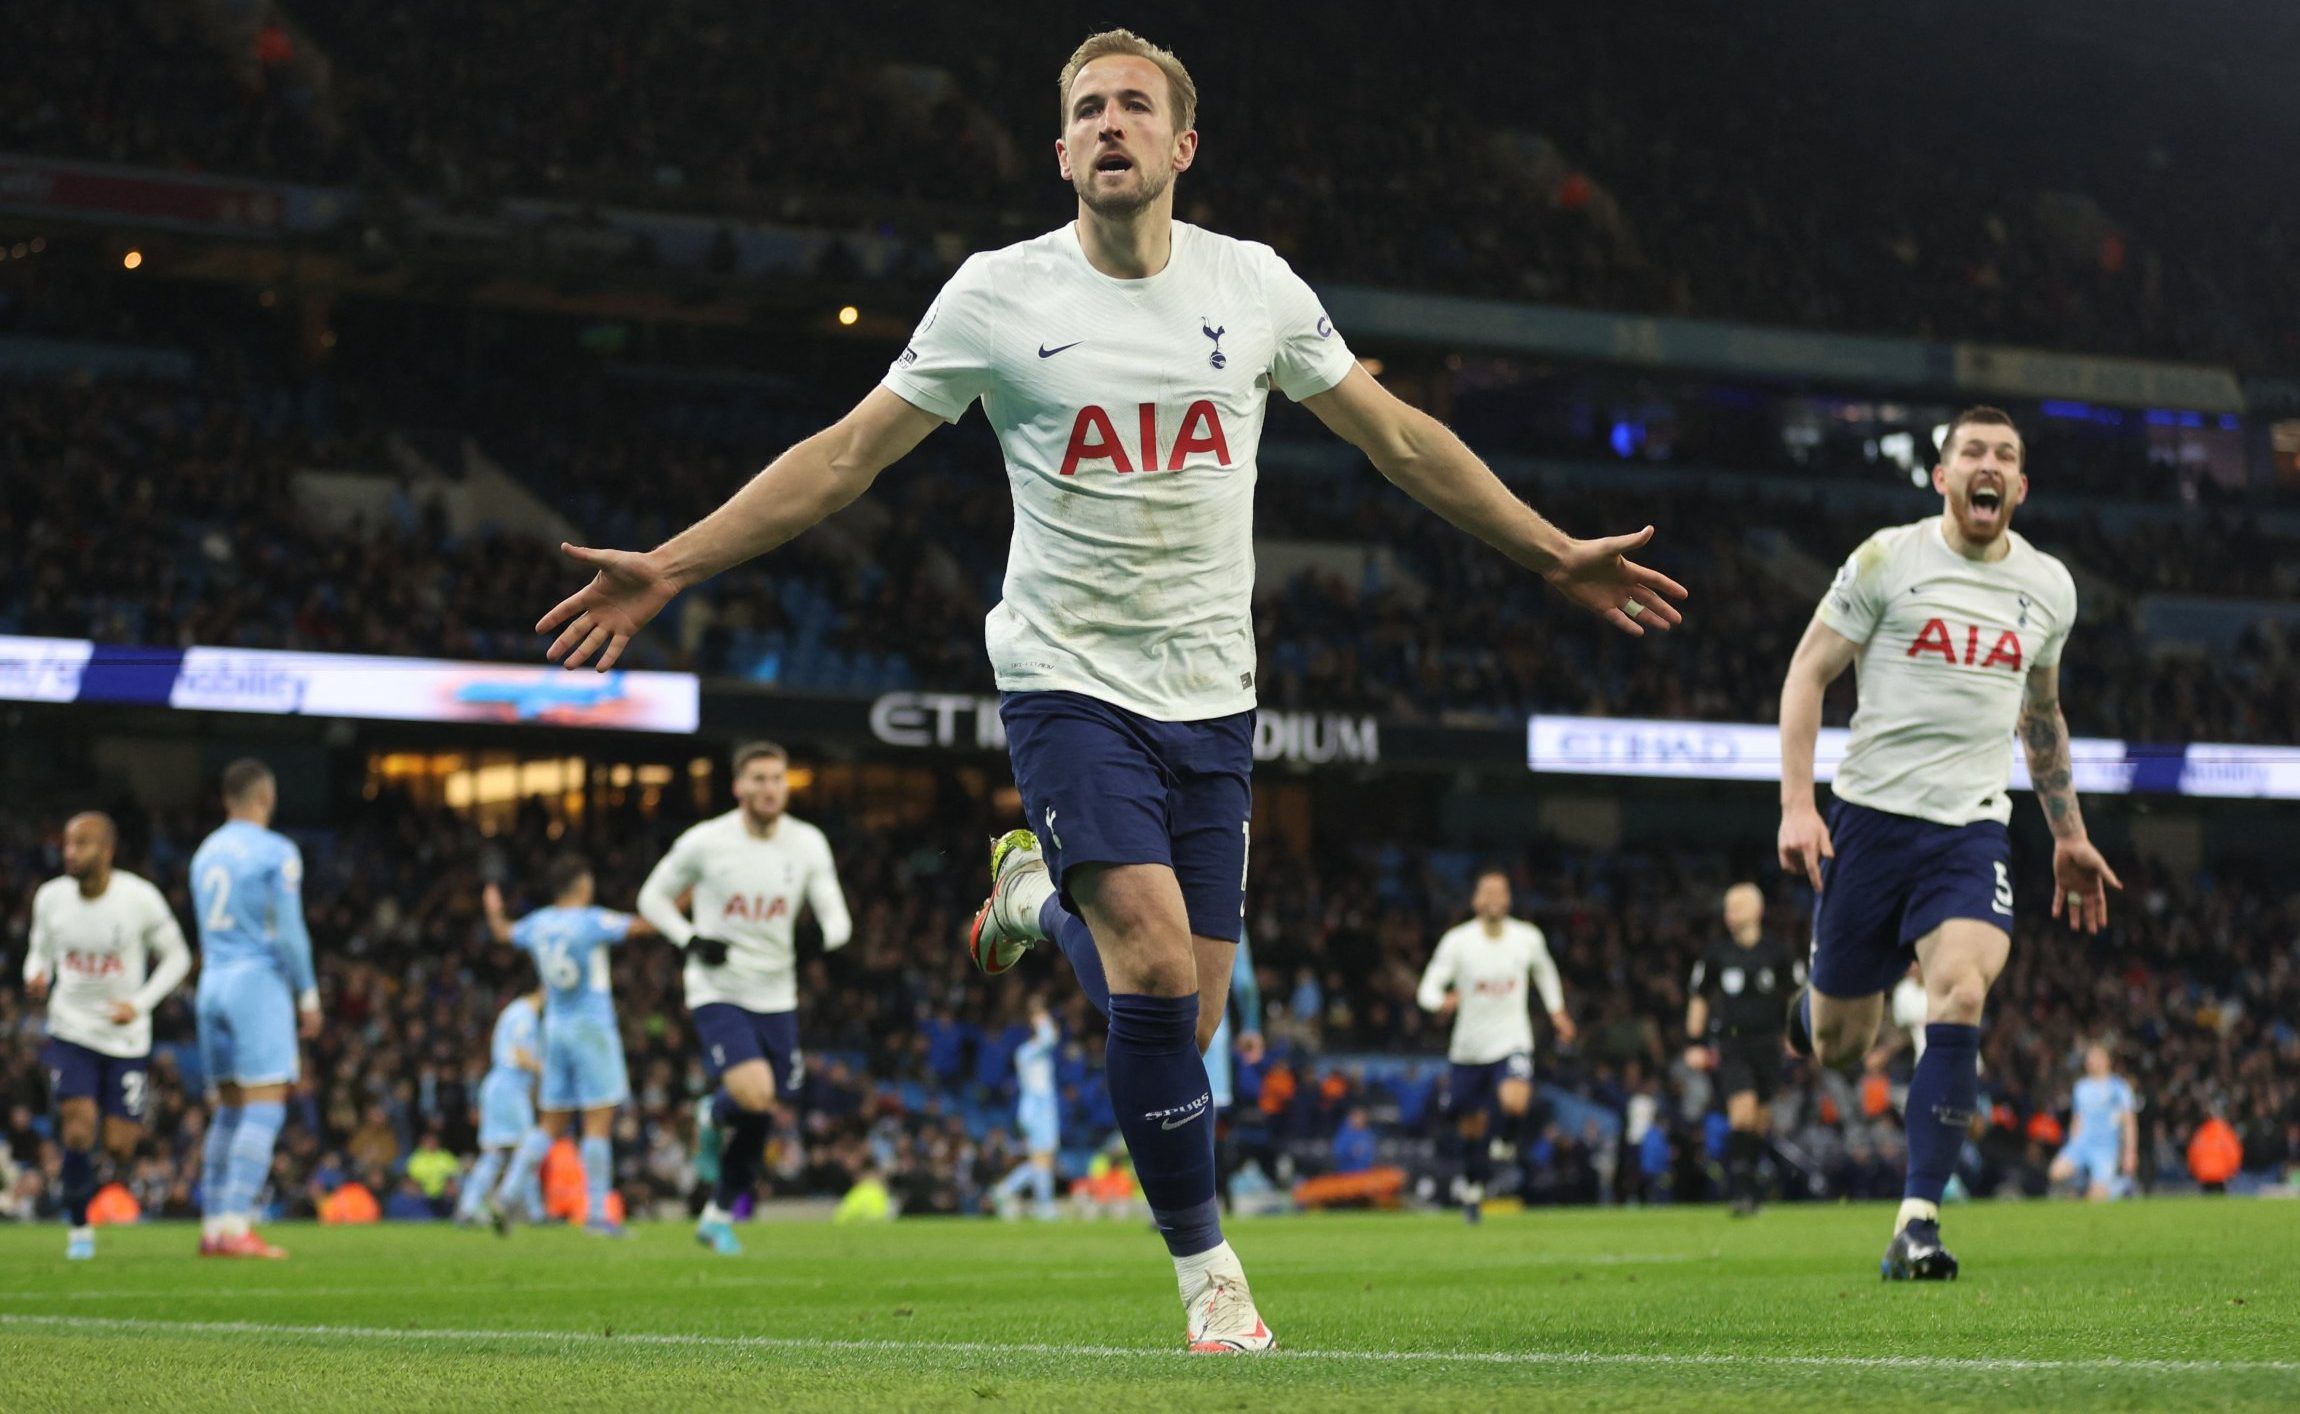 Spurs striker Harry Kane celebrates scoring the winner against Man City in the Premier League